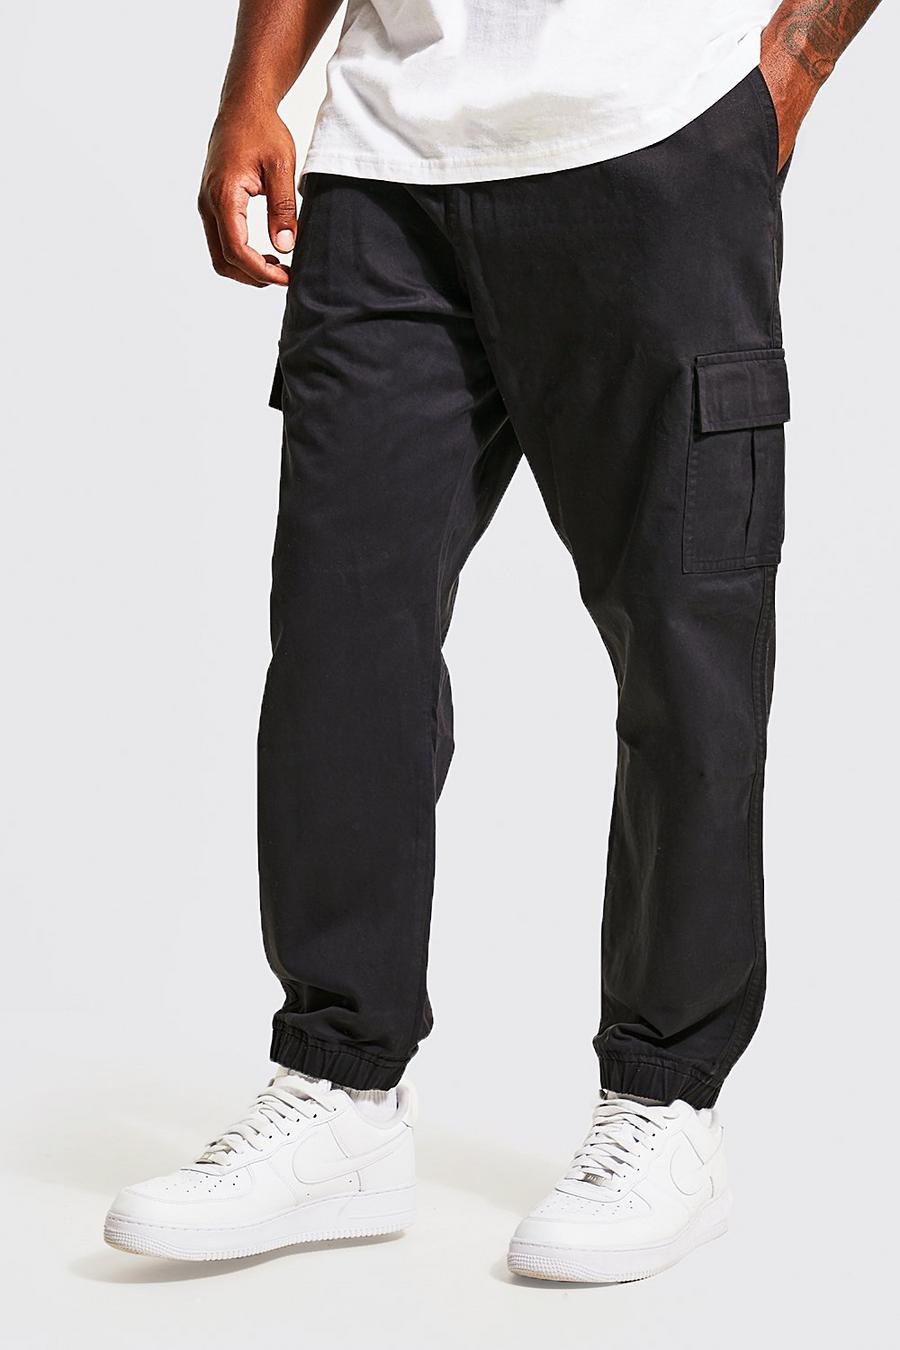 Pantaloni Cargo Plus Size Regular Fit, Black nero